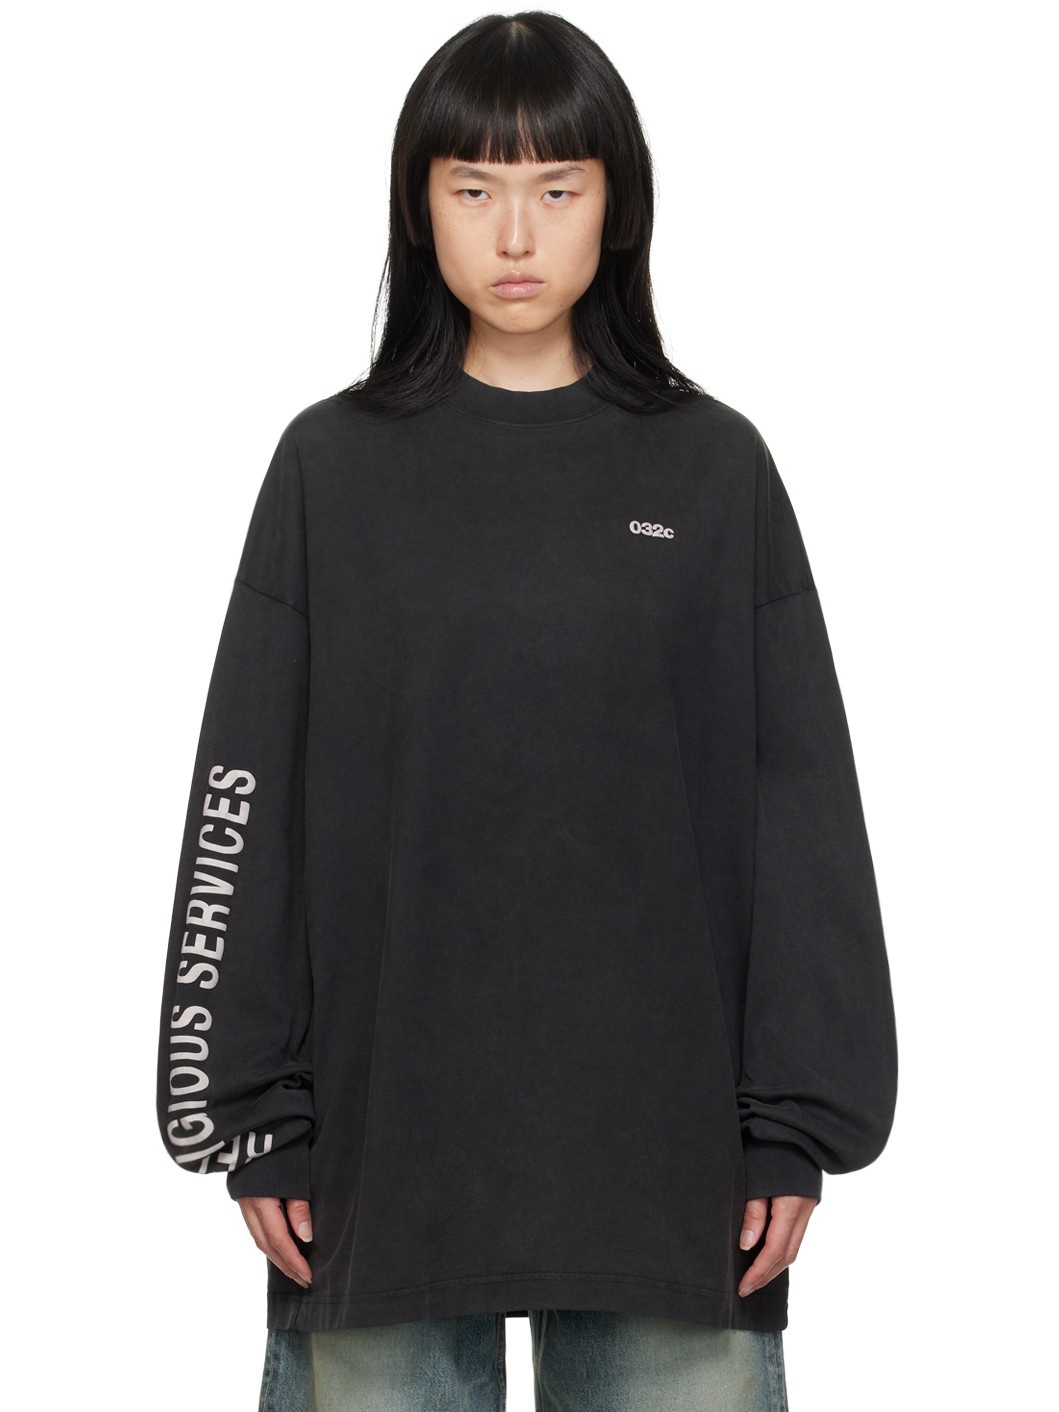 SSENSE XX Black Long Sleeve ’Religious Services' T-Shirt - 1